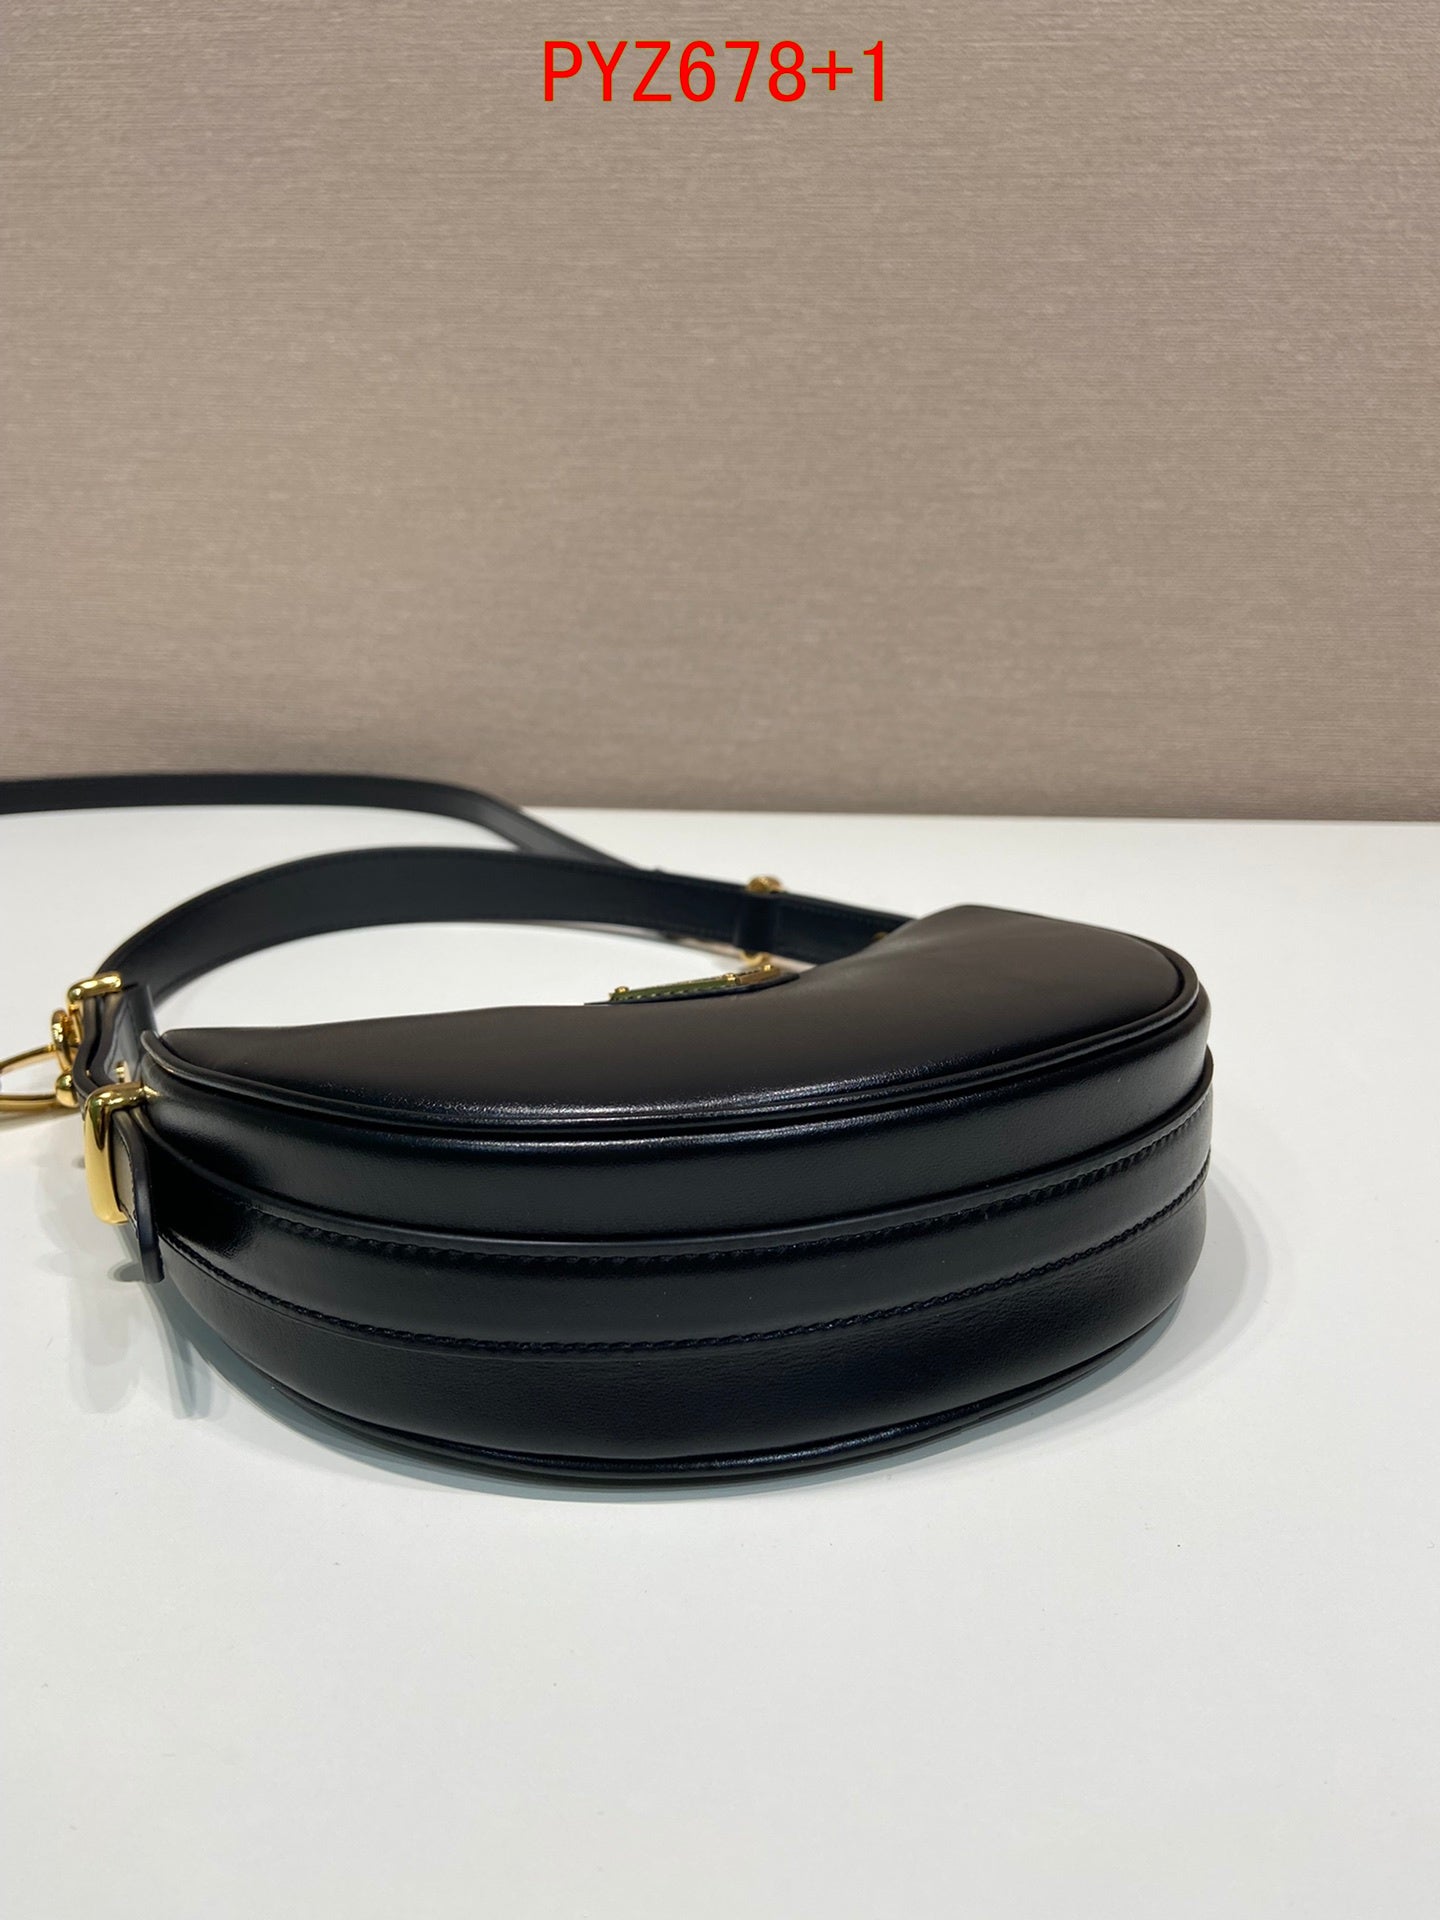 Prada Arqué leather mini shoulder bag